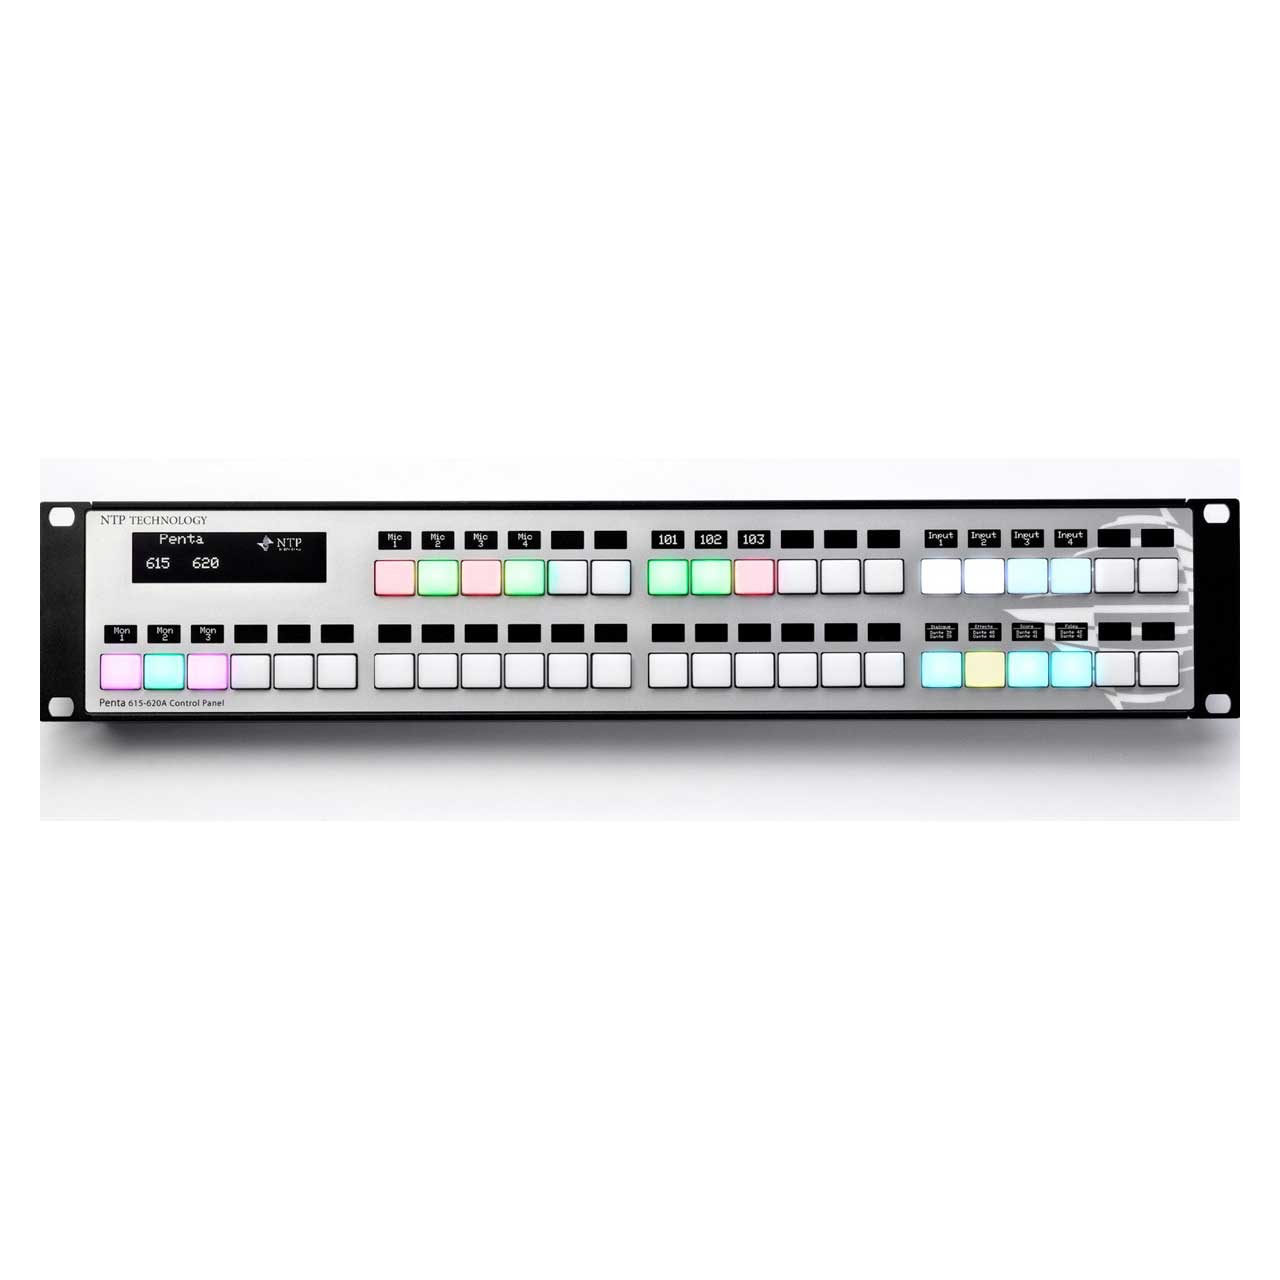 PENTA-615-620A-PAN 19 Inch 2RU Control Panel with 42 User-Programmable Keys and Large Display PENTA-615620APAN